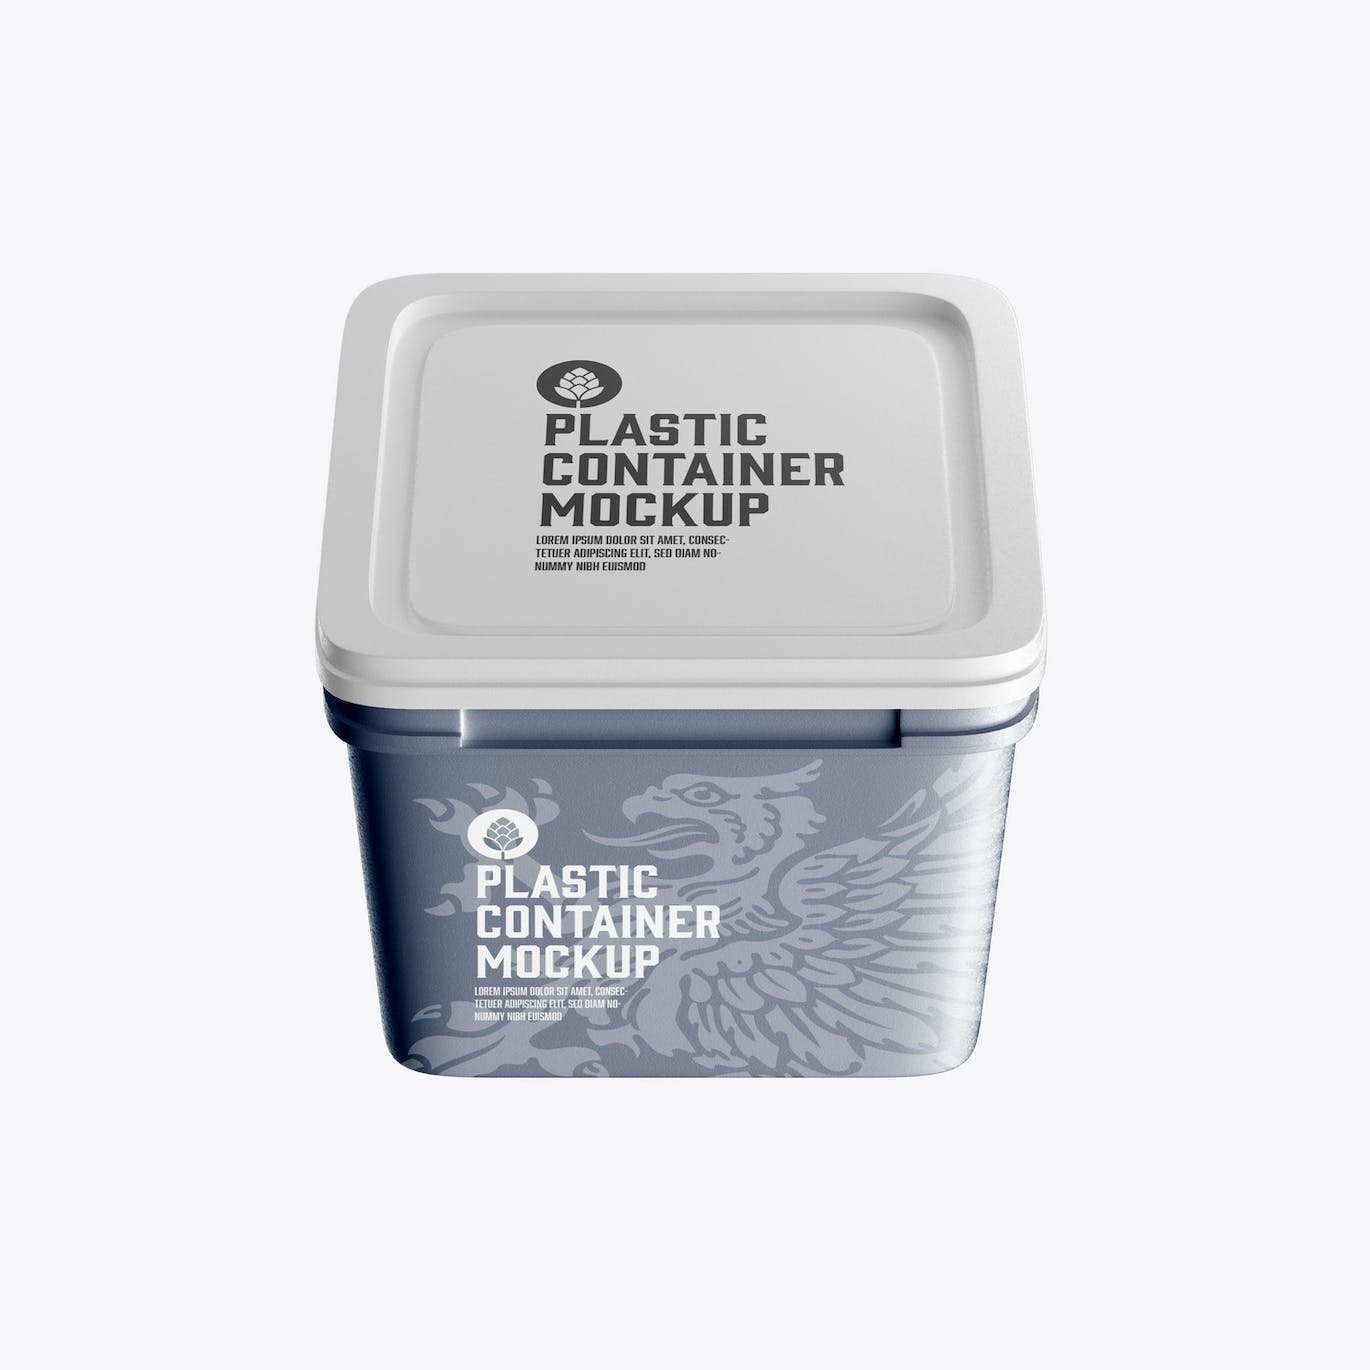 方形塑料容器包装设计样机 Square Plastic Container Mockup 样机素材 第16张